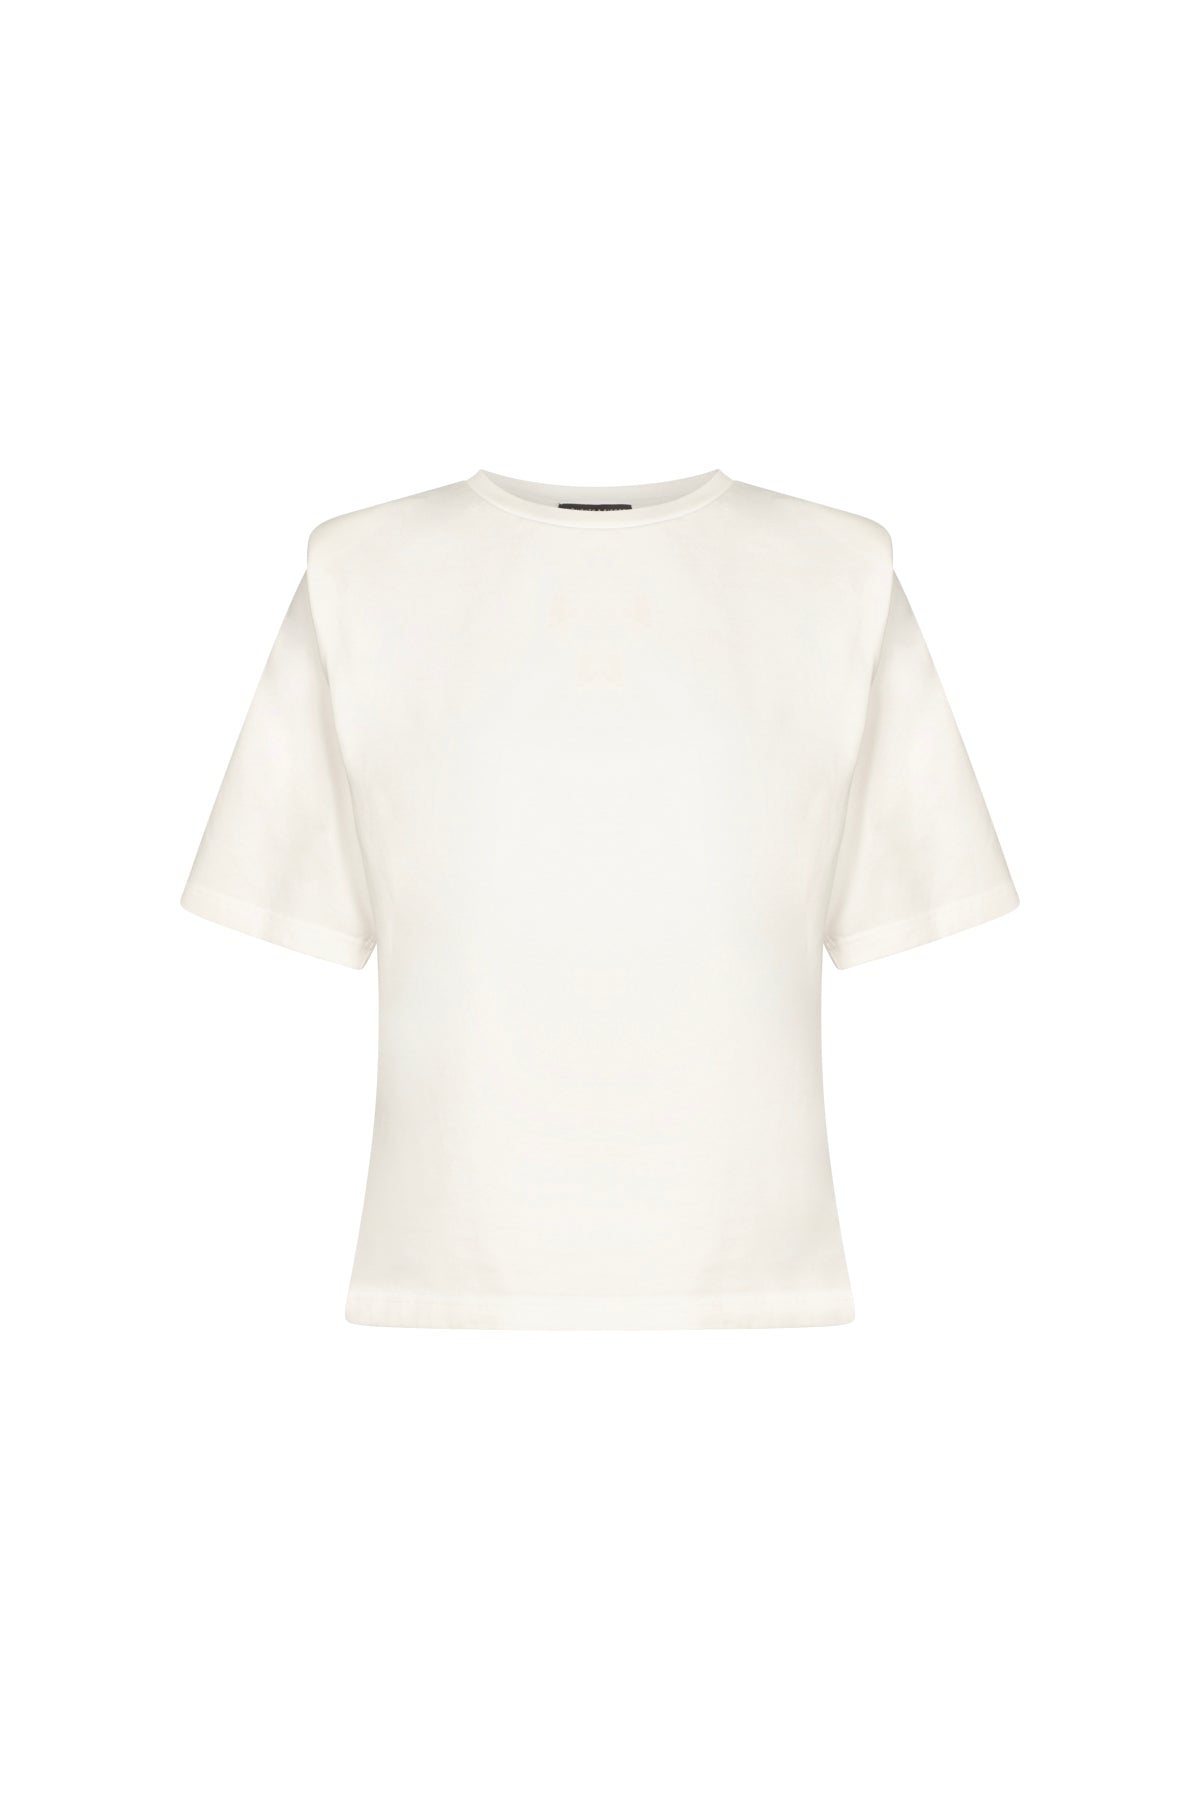 GISELE Off White Shoulder Pad T-Shirt